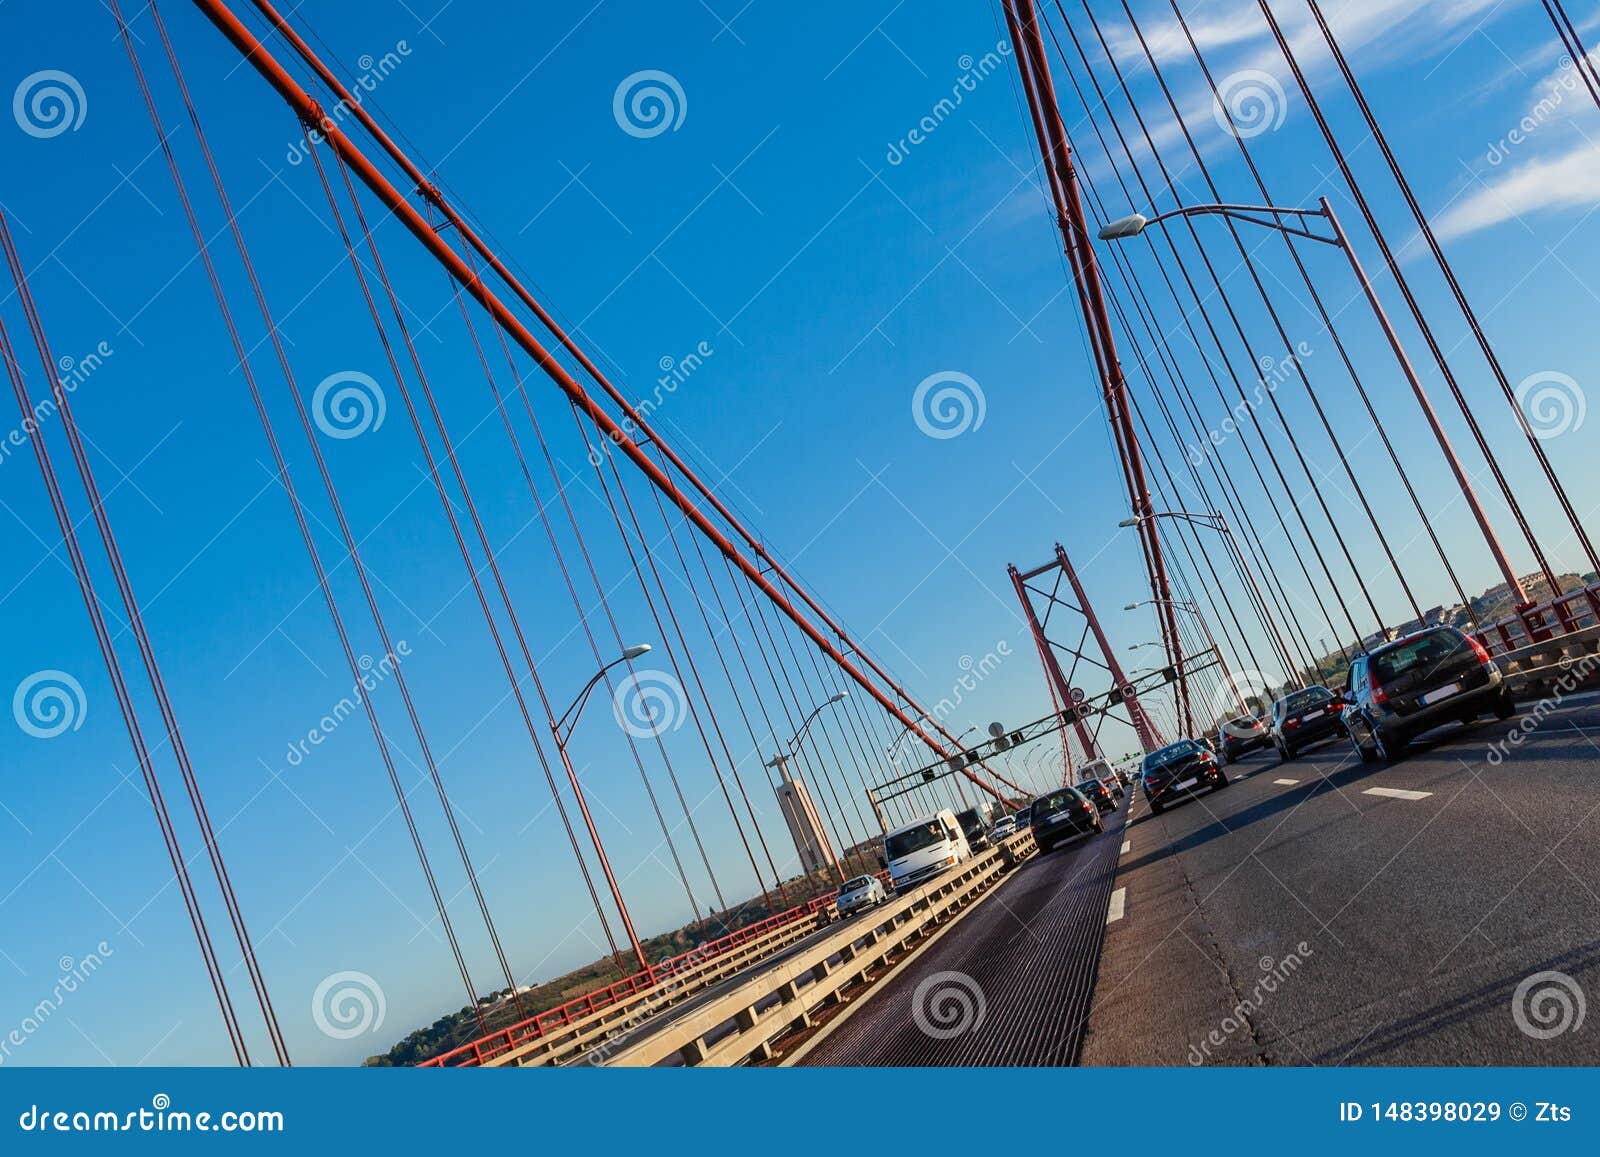 lisbon, portugal. cars crossing or driving through the 25 de abril suspension bridge